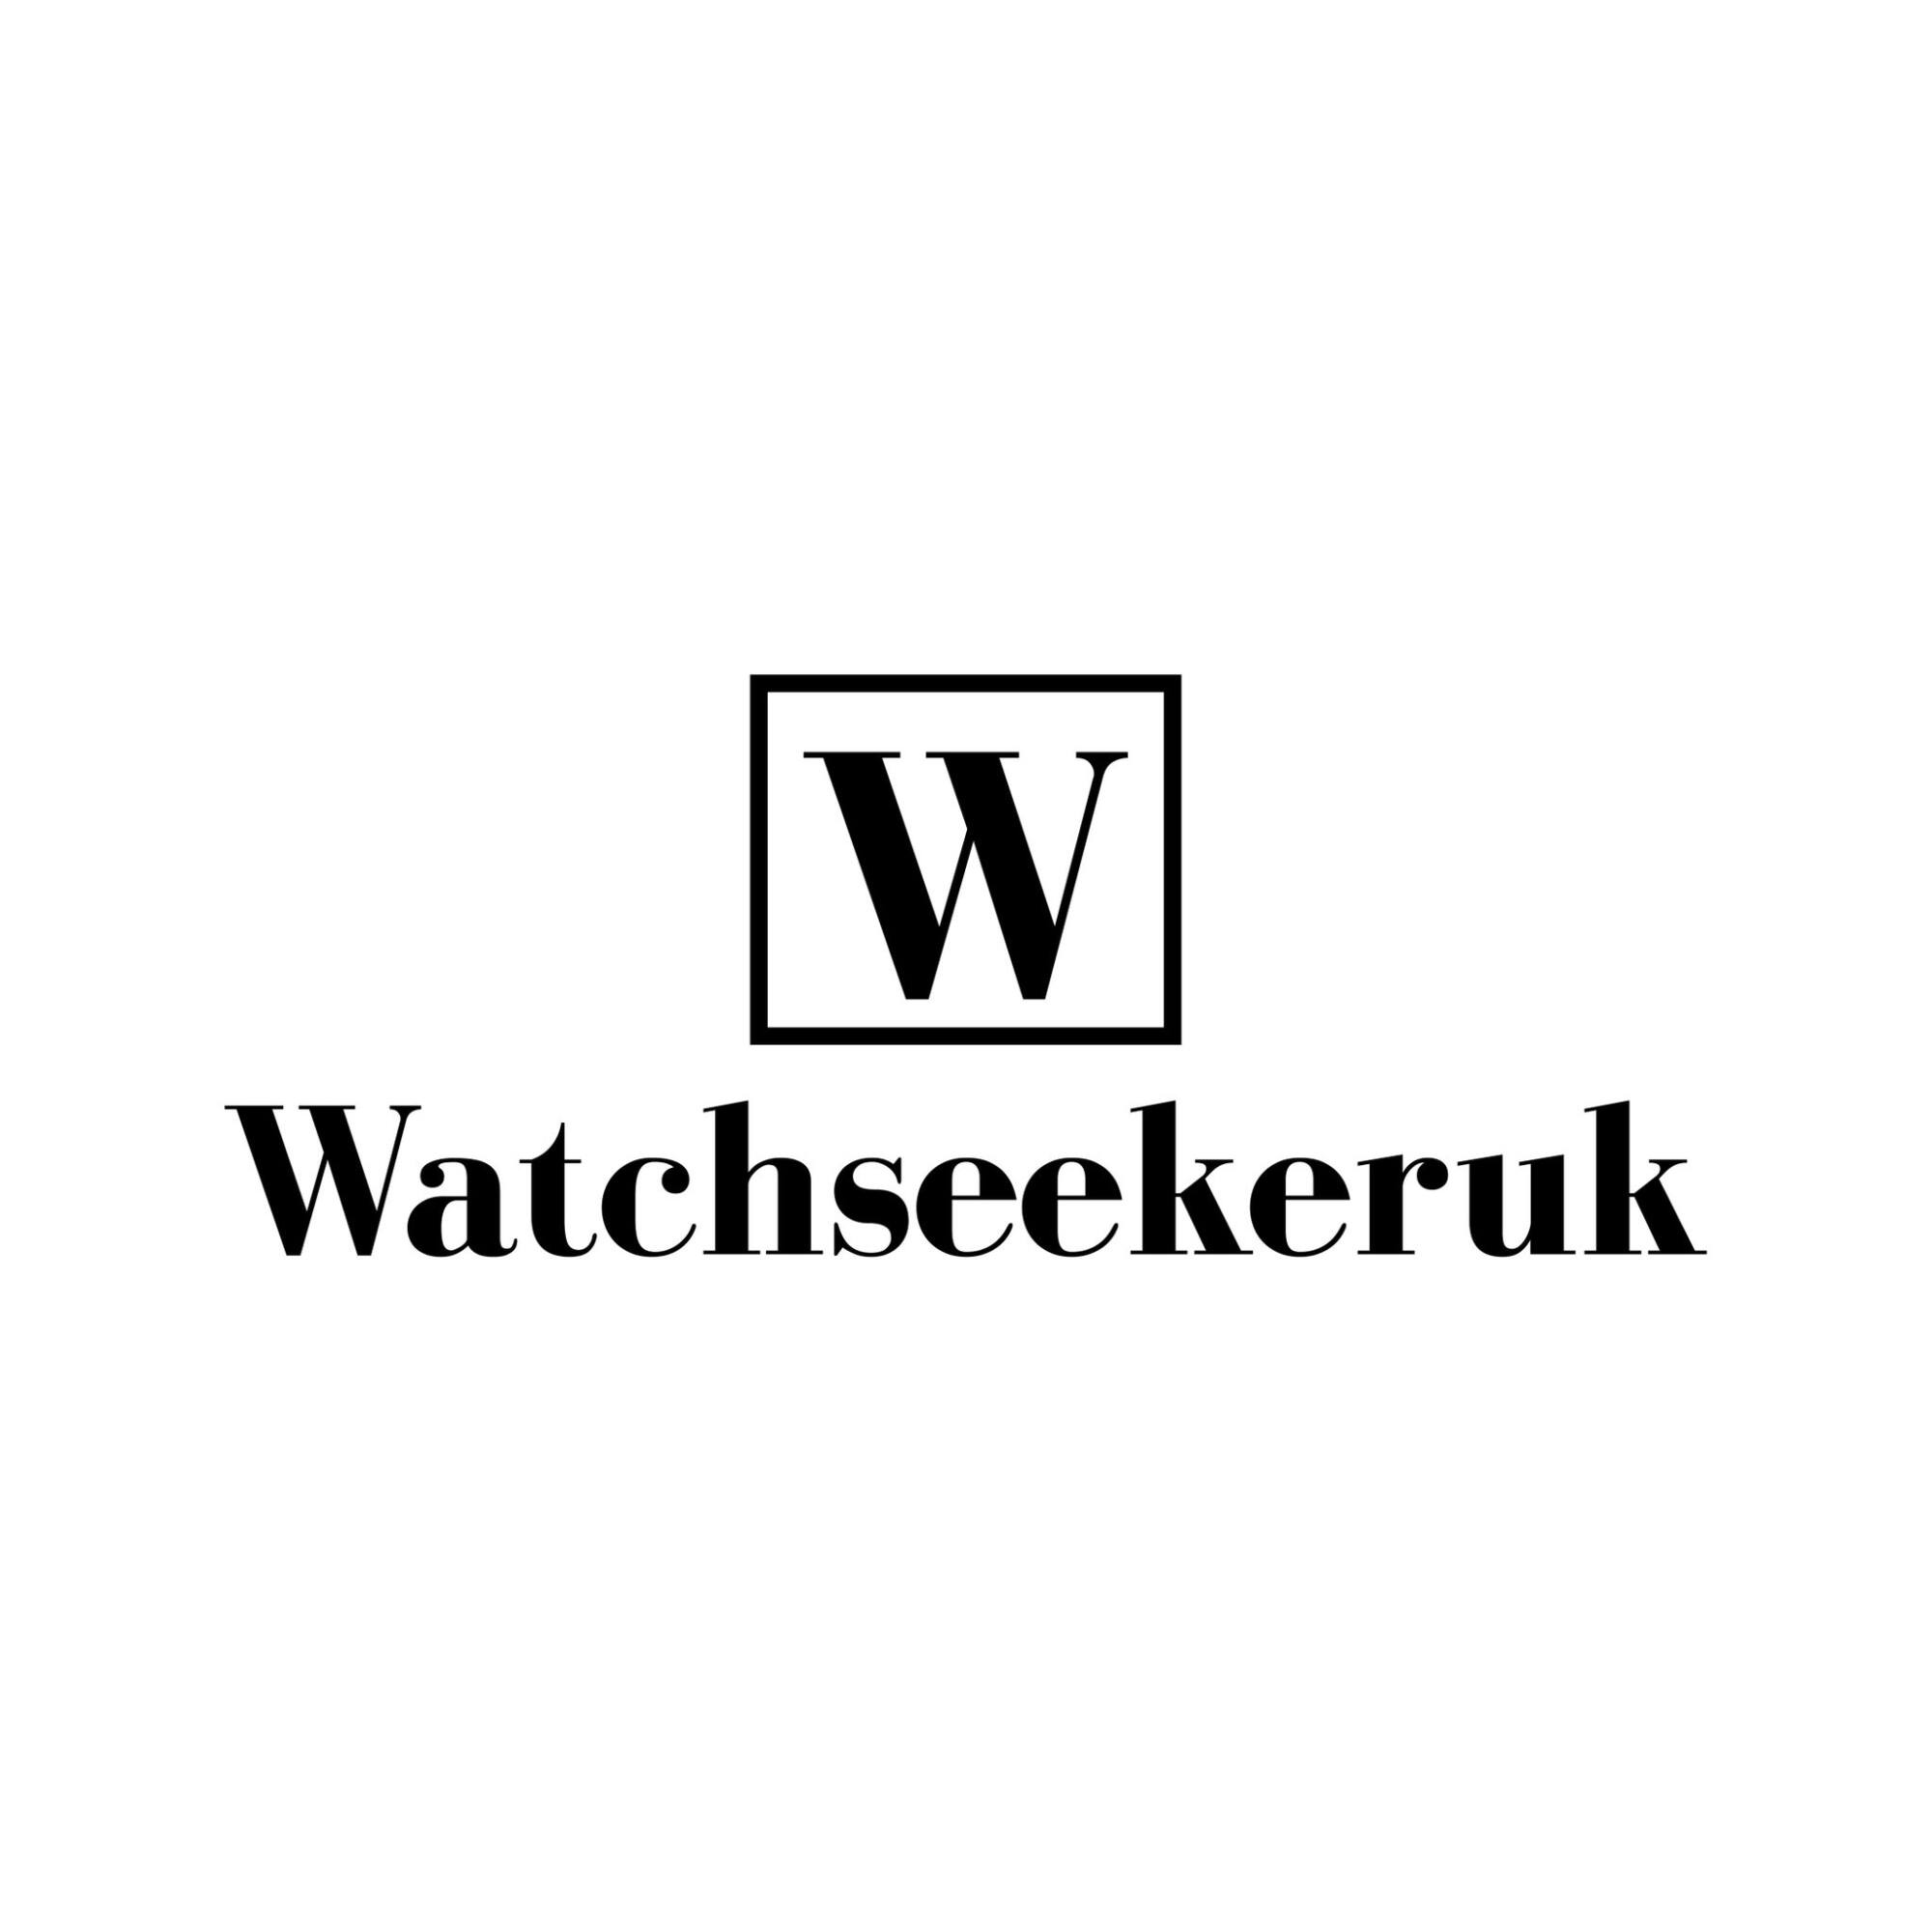 Watchseekeruk - MondaniWeb